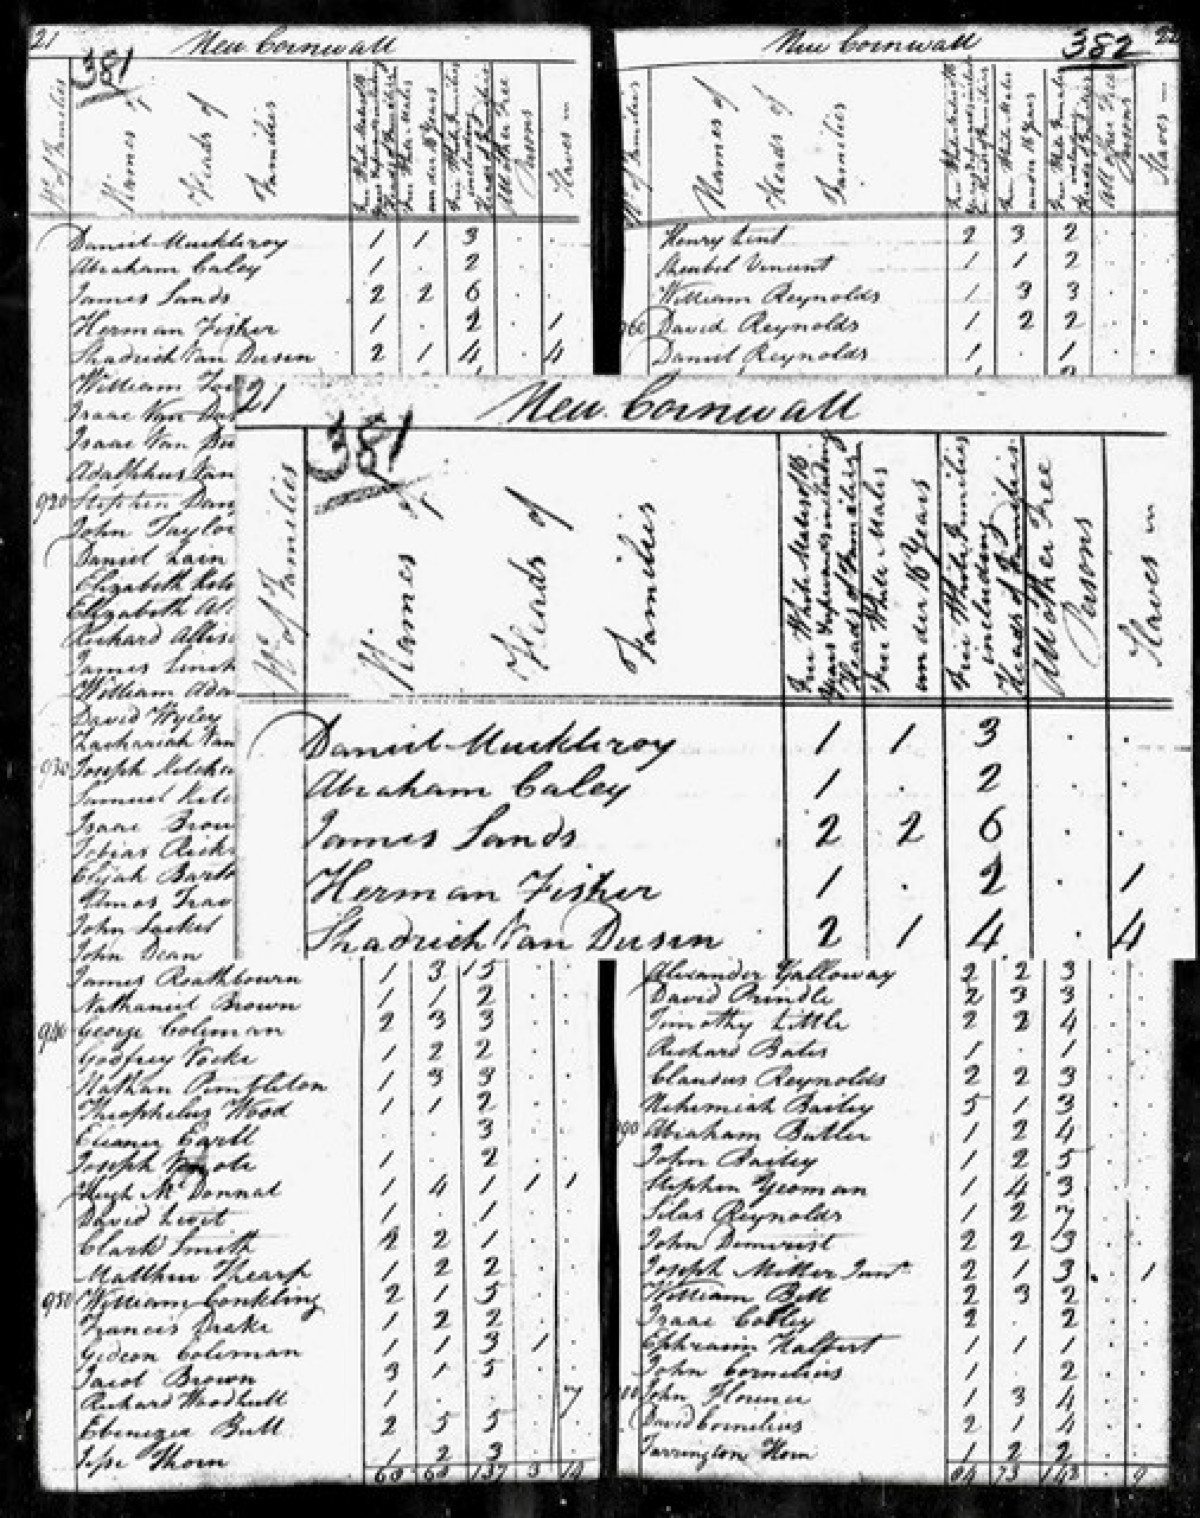 First national census, Cornwall, NY, 1790